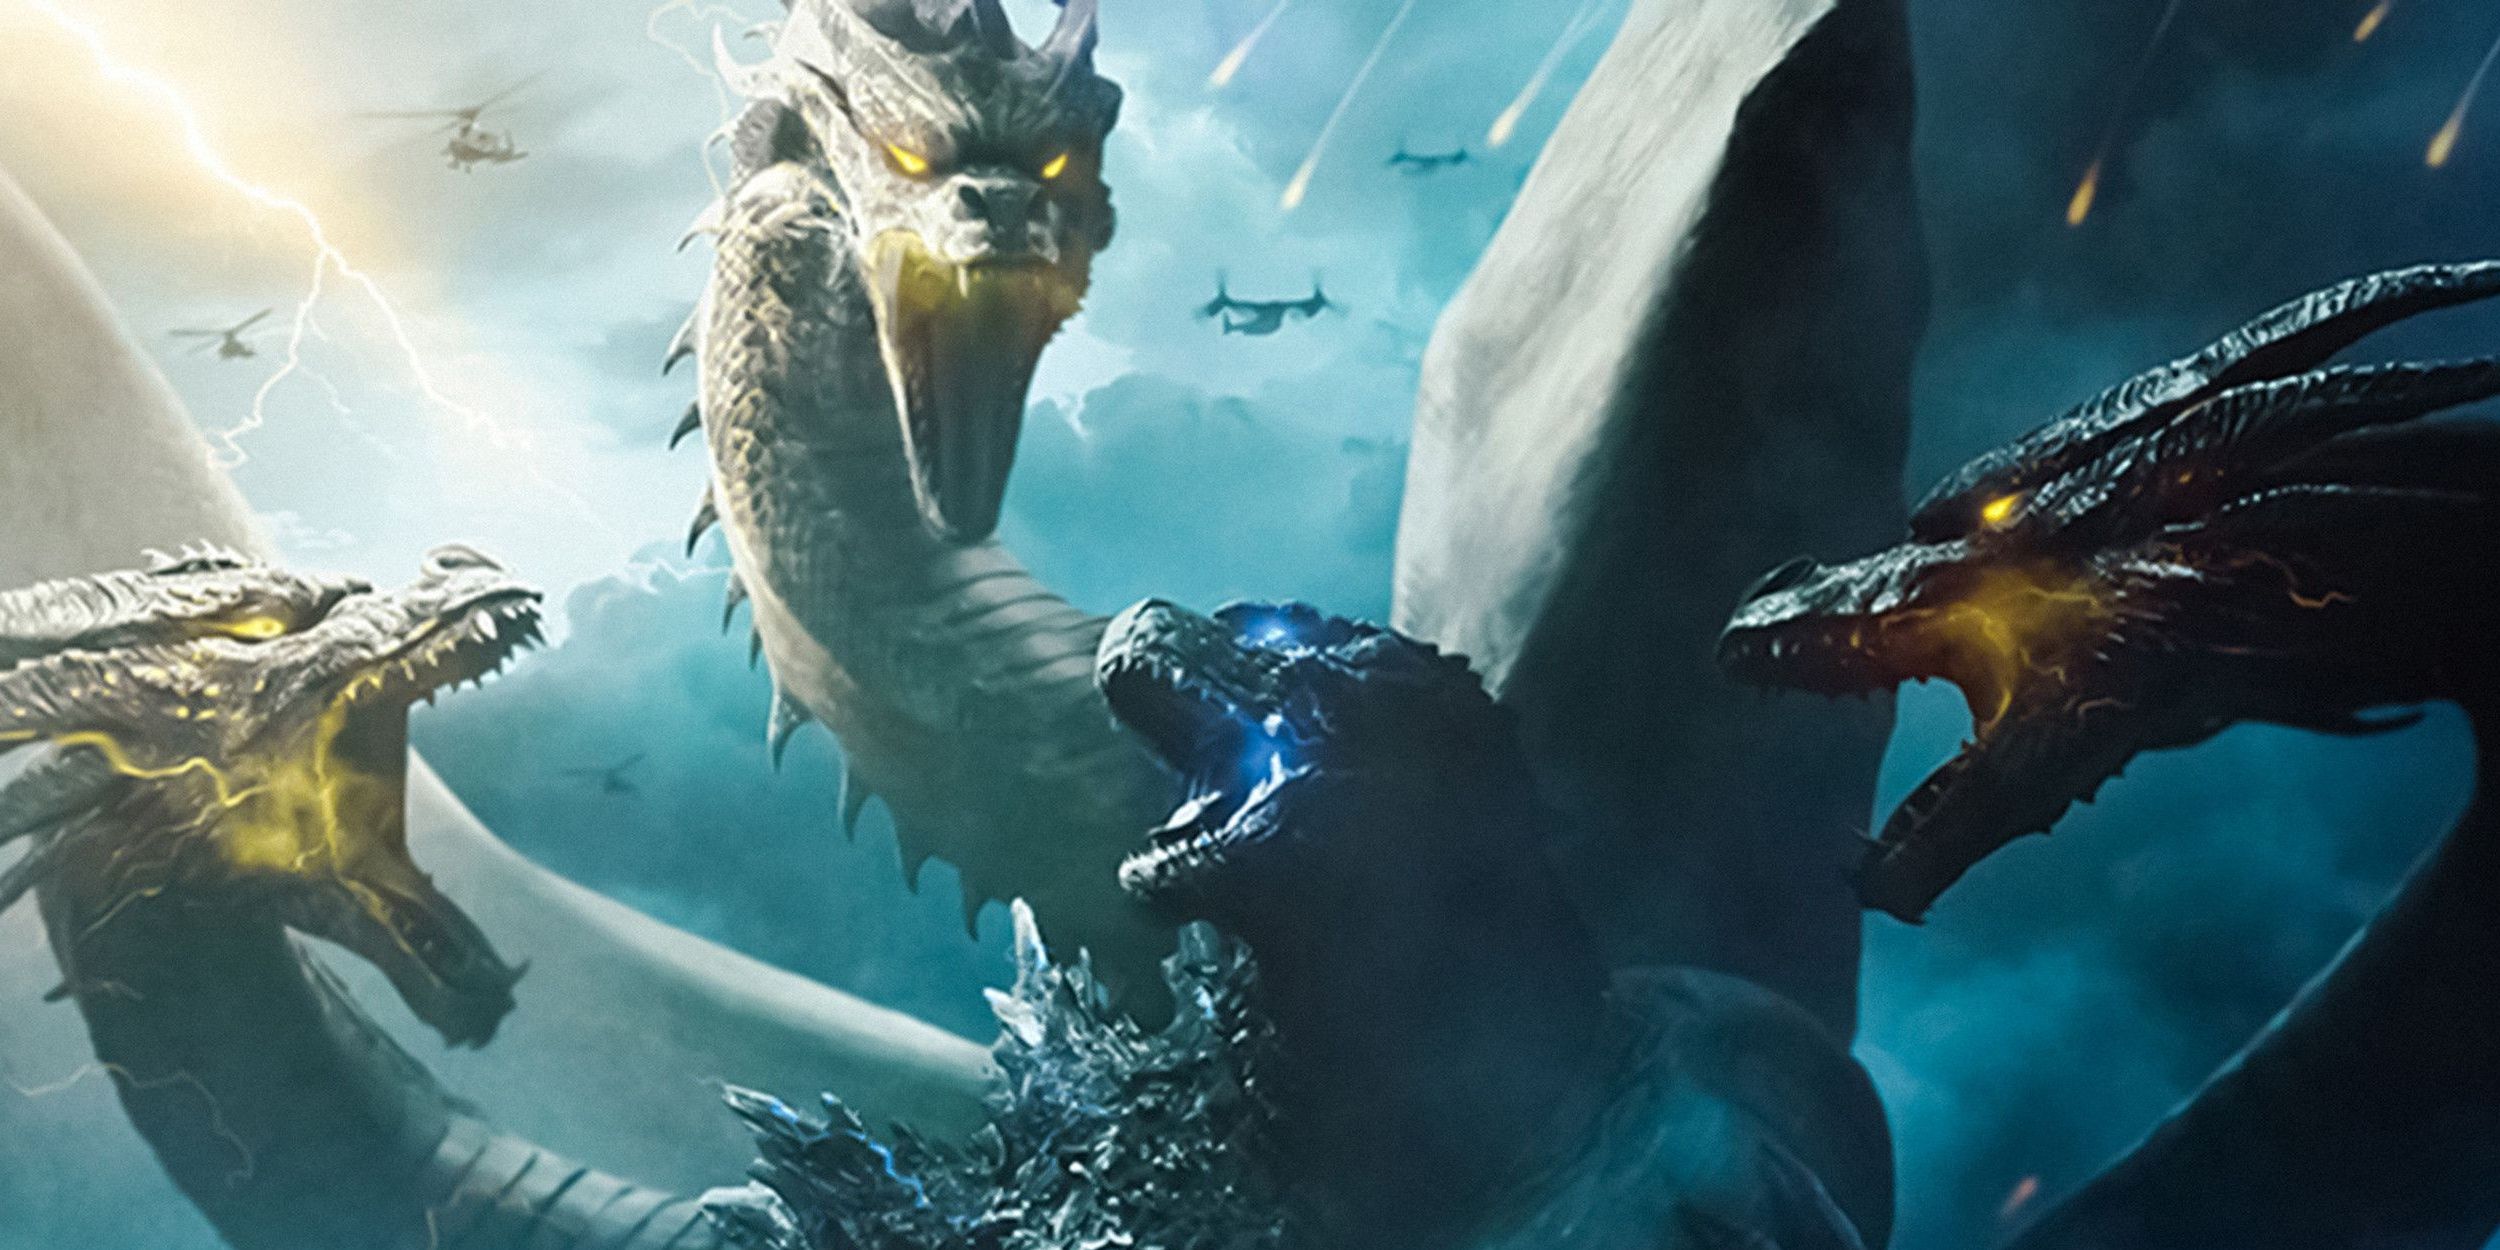 Godzilla Vs King Ghidorah from the 2019 film, Godzilla: King of the Monsters